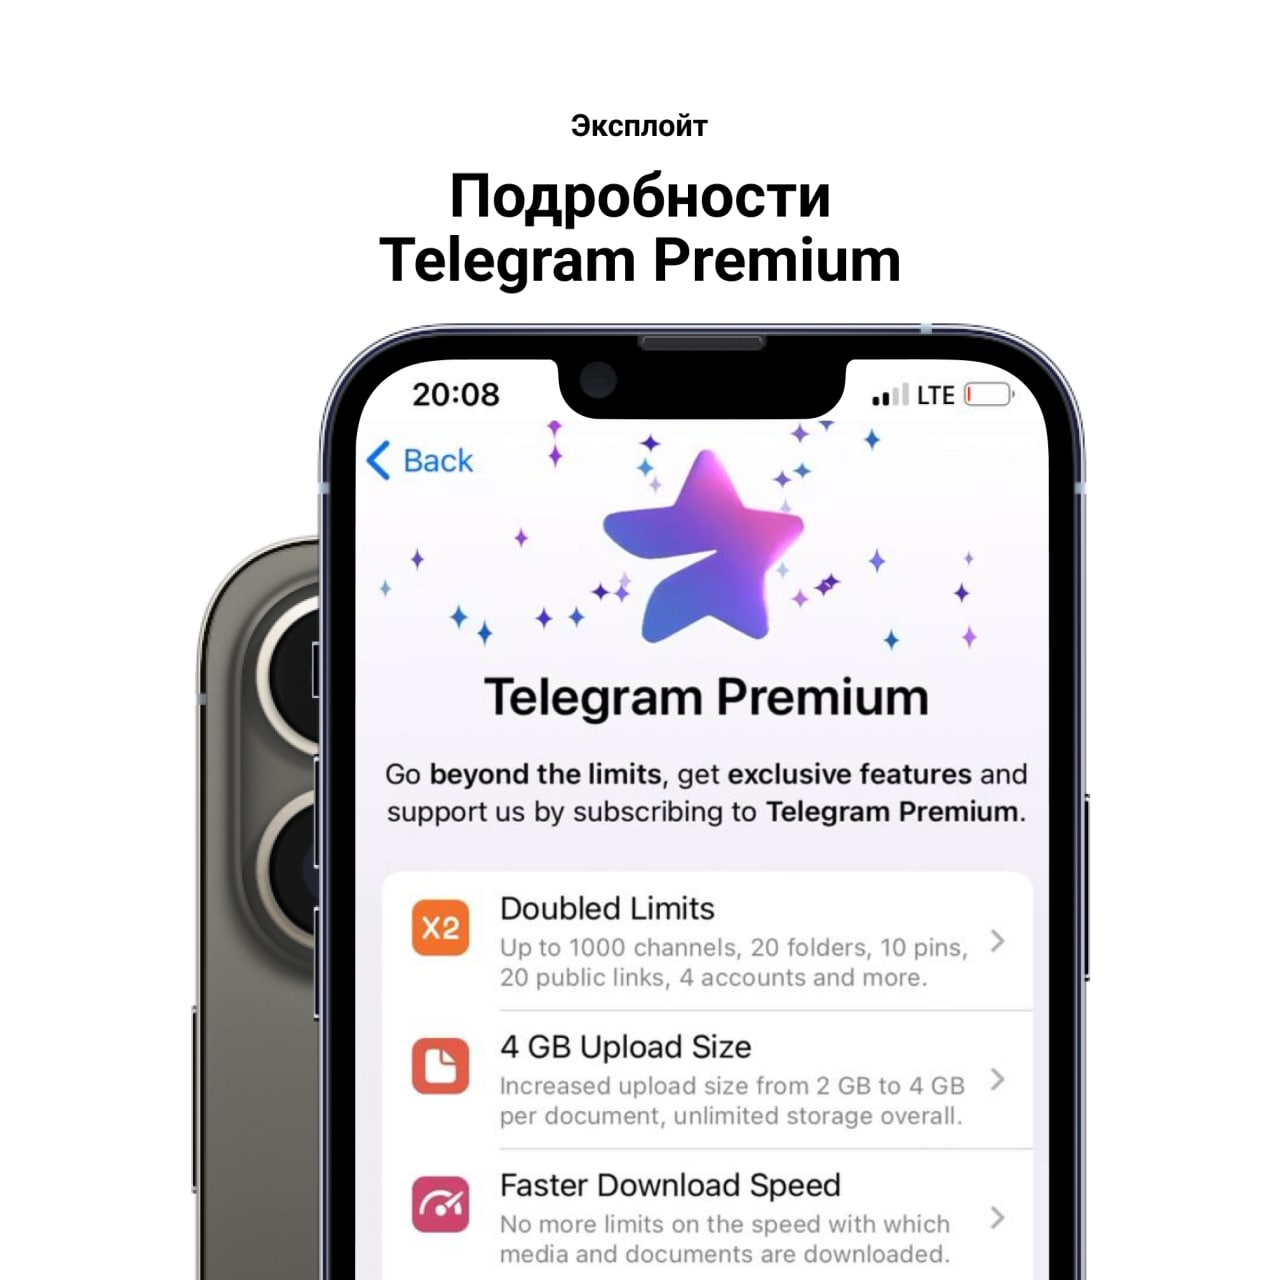 Скачать телеграмм премиум на андроид бесплатно последняя версия (120) фото